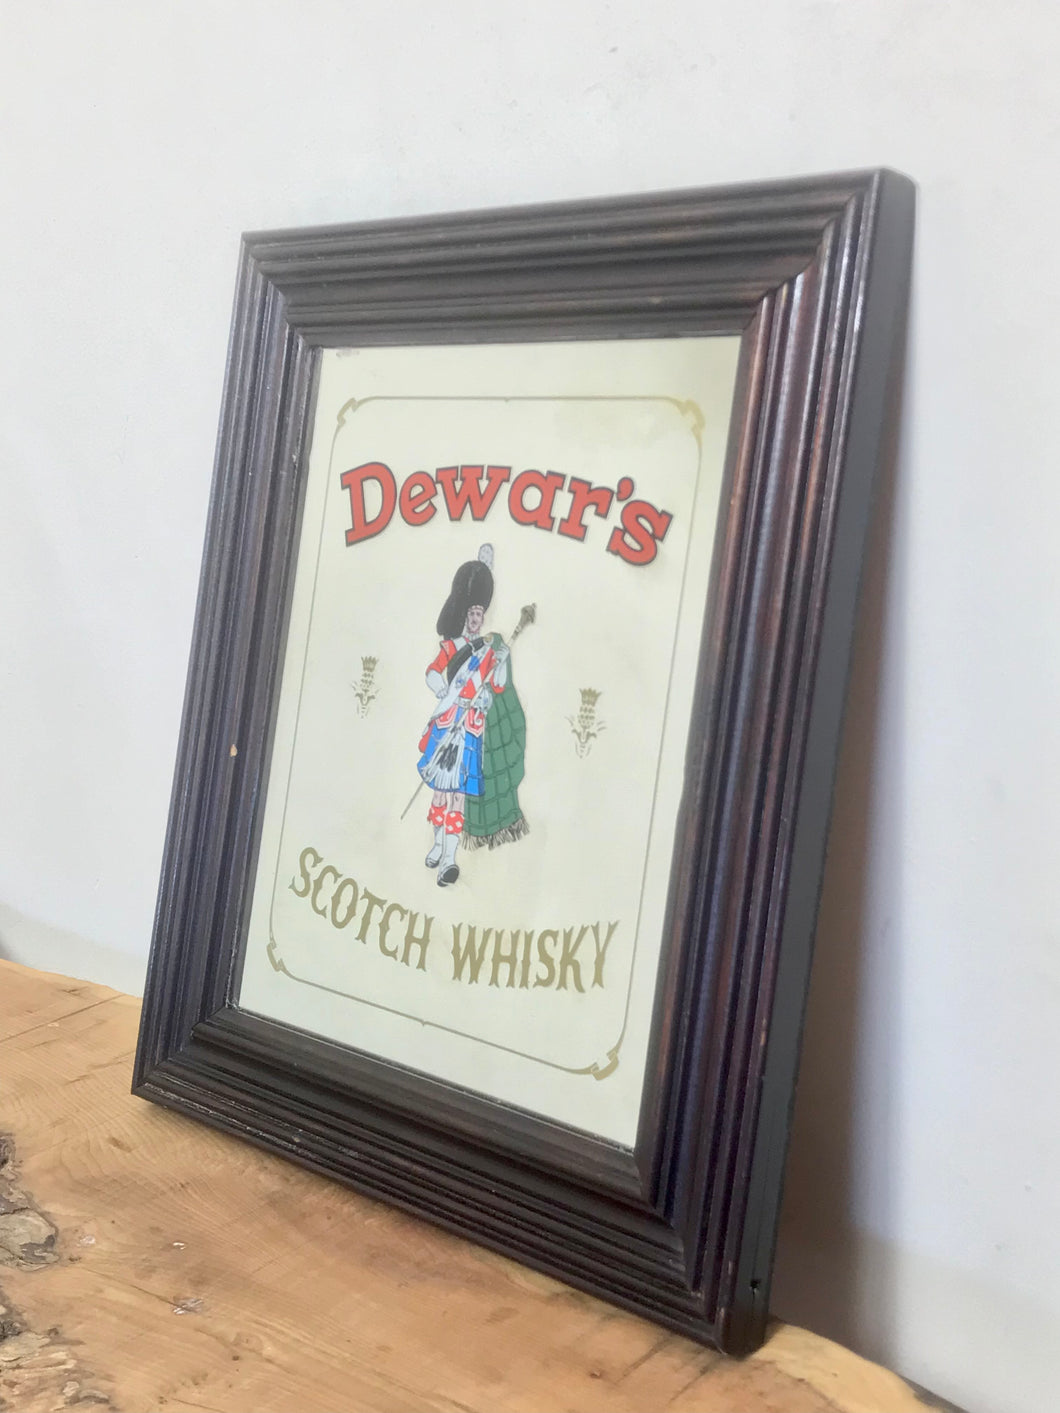 Wonderful vintage Dewars scotch whisky mirror advertising collectibles piece food and drink